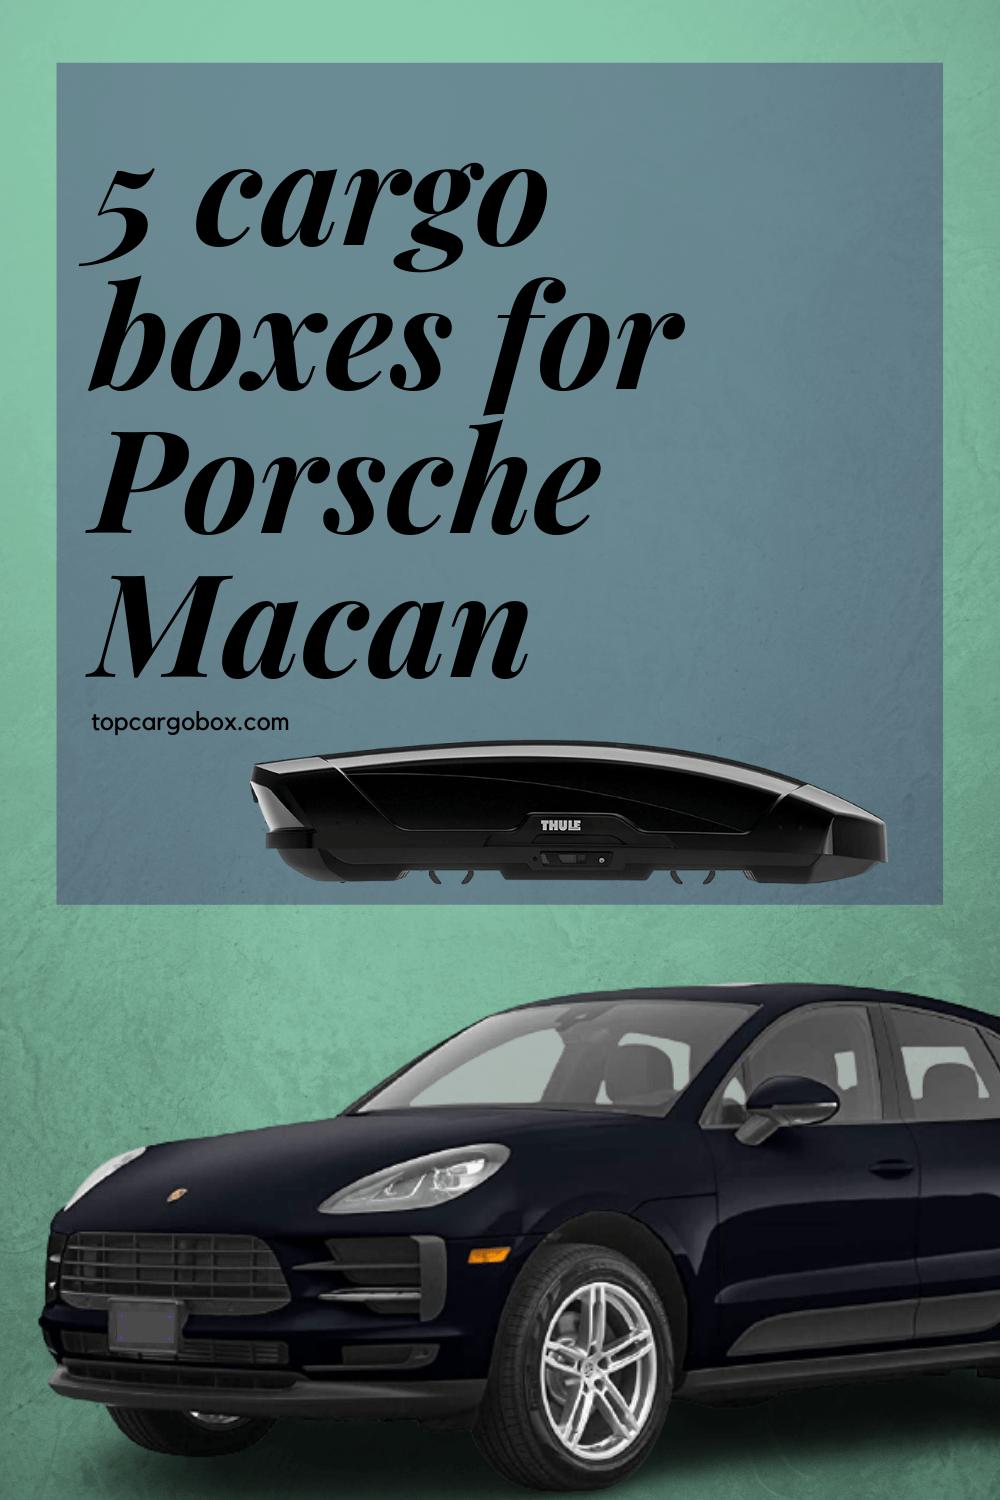 5 best cargo boxes for porsche macan